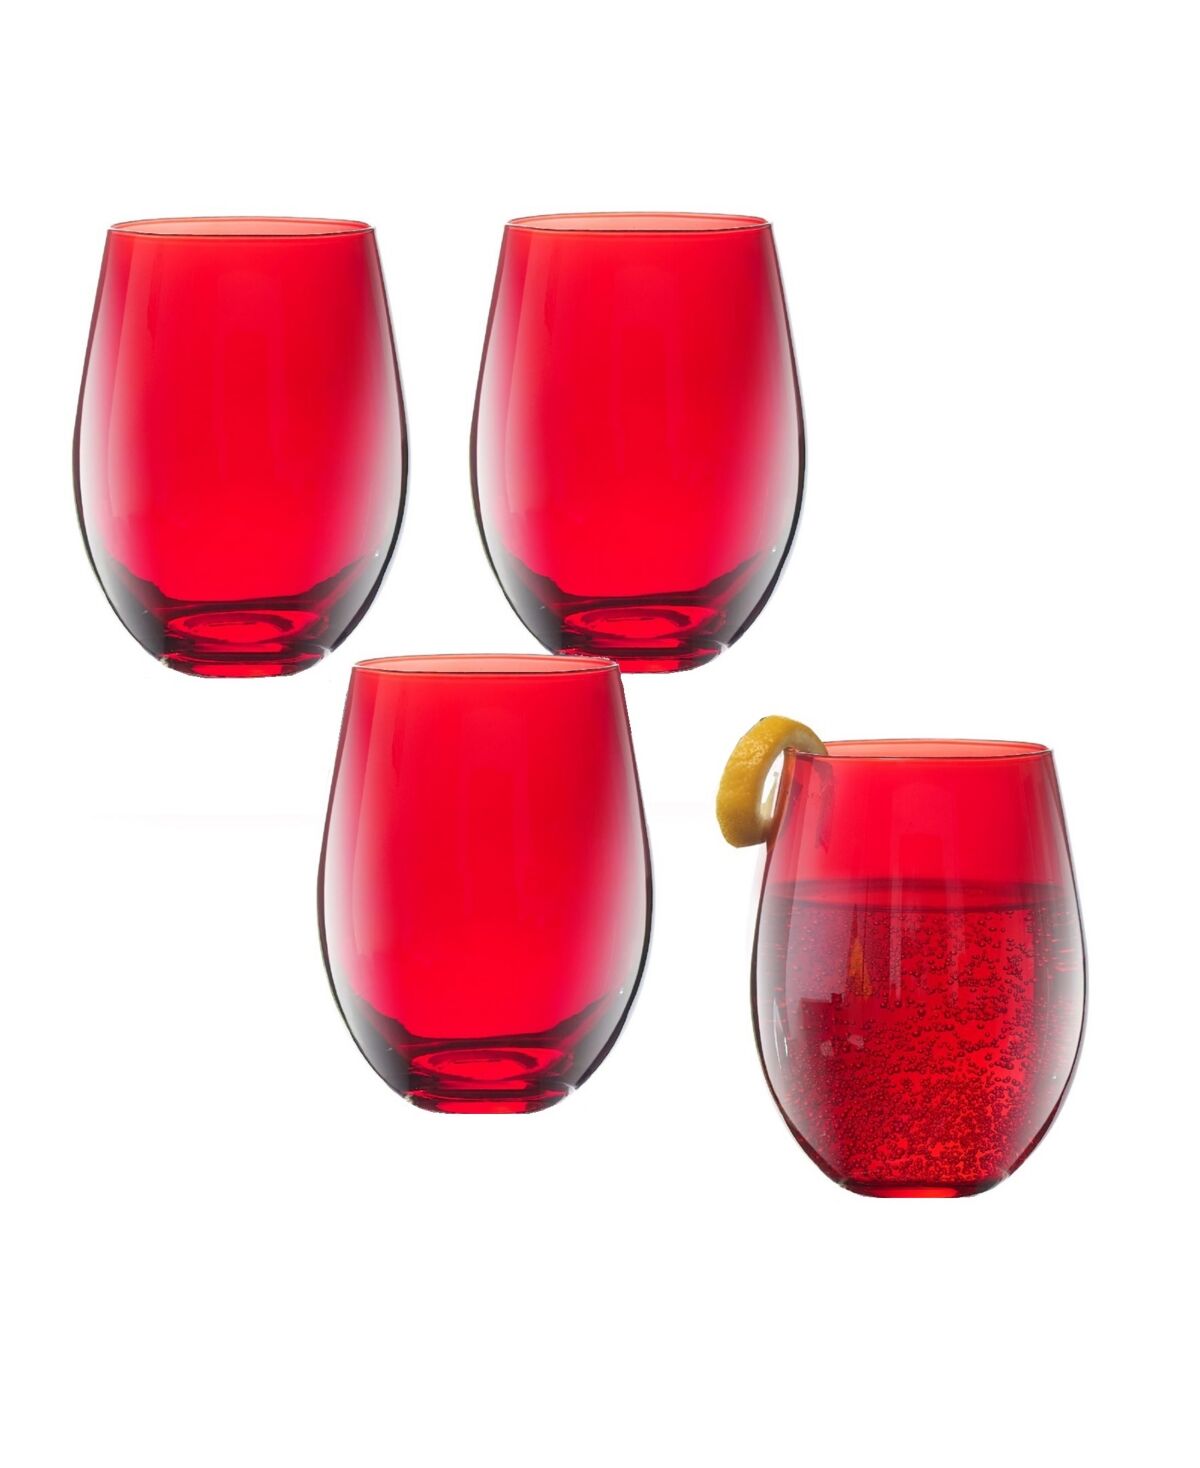 Qualia Glass Carnival Stemless 19 oz Wine Glasses, Set of 4 - Red